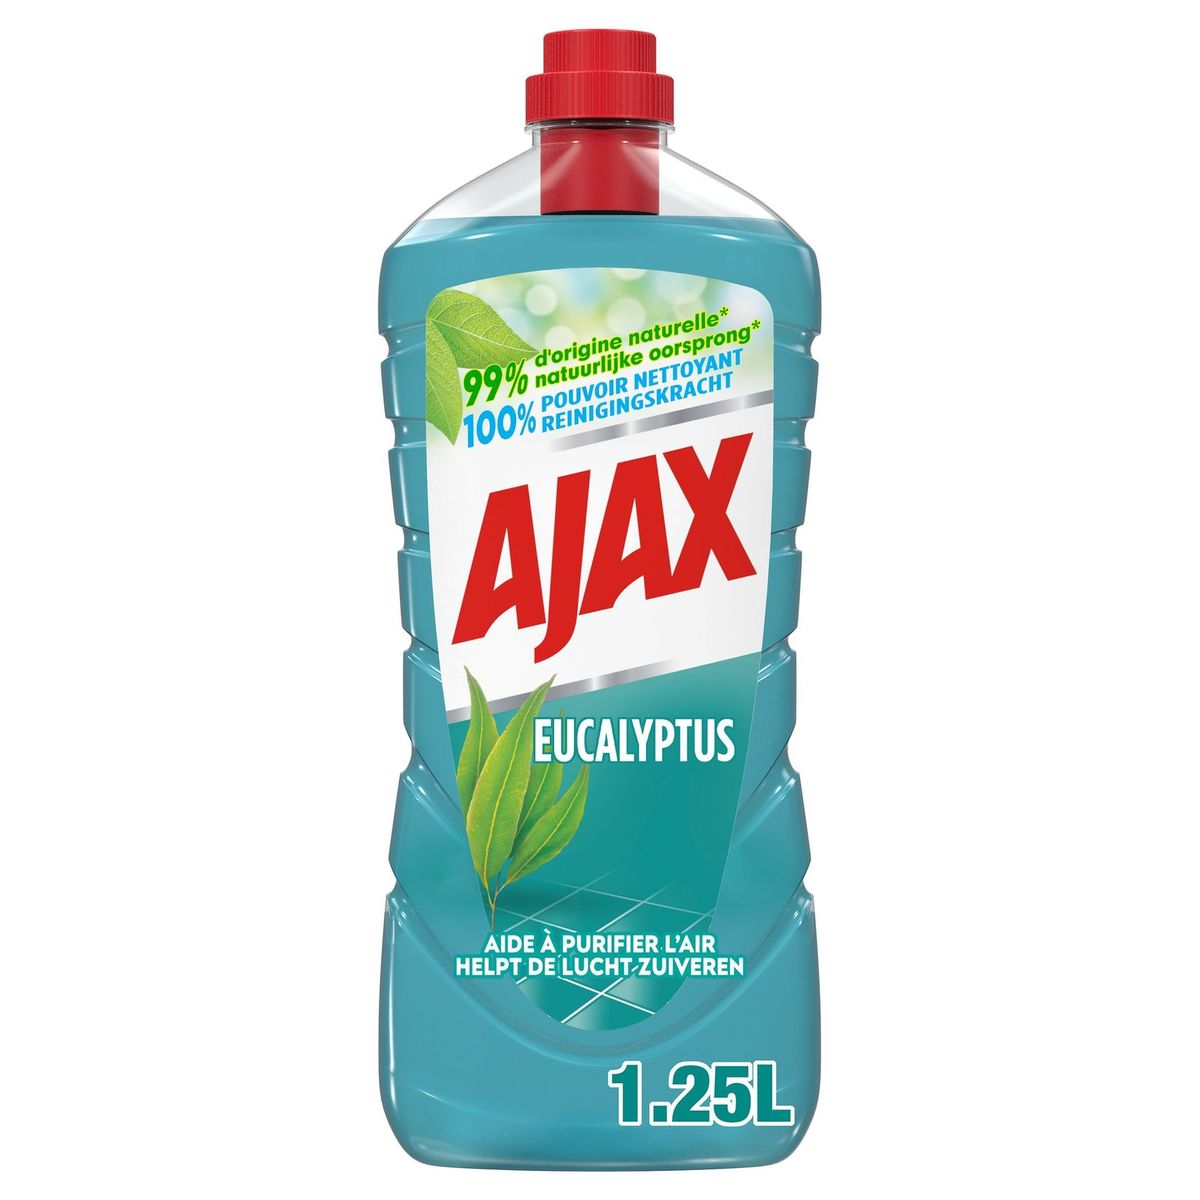 Ajax Eucalyptus allesreiniger - 1.25L